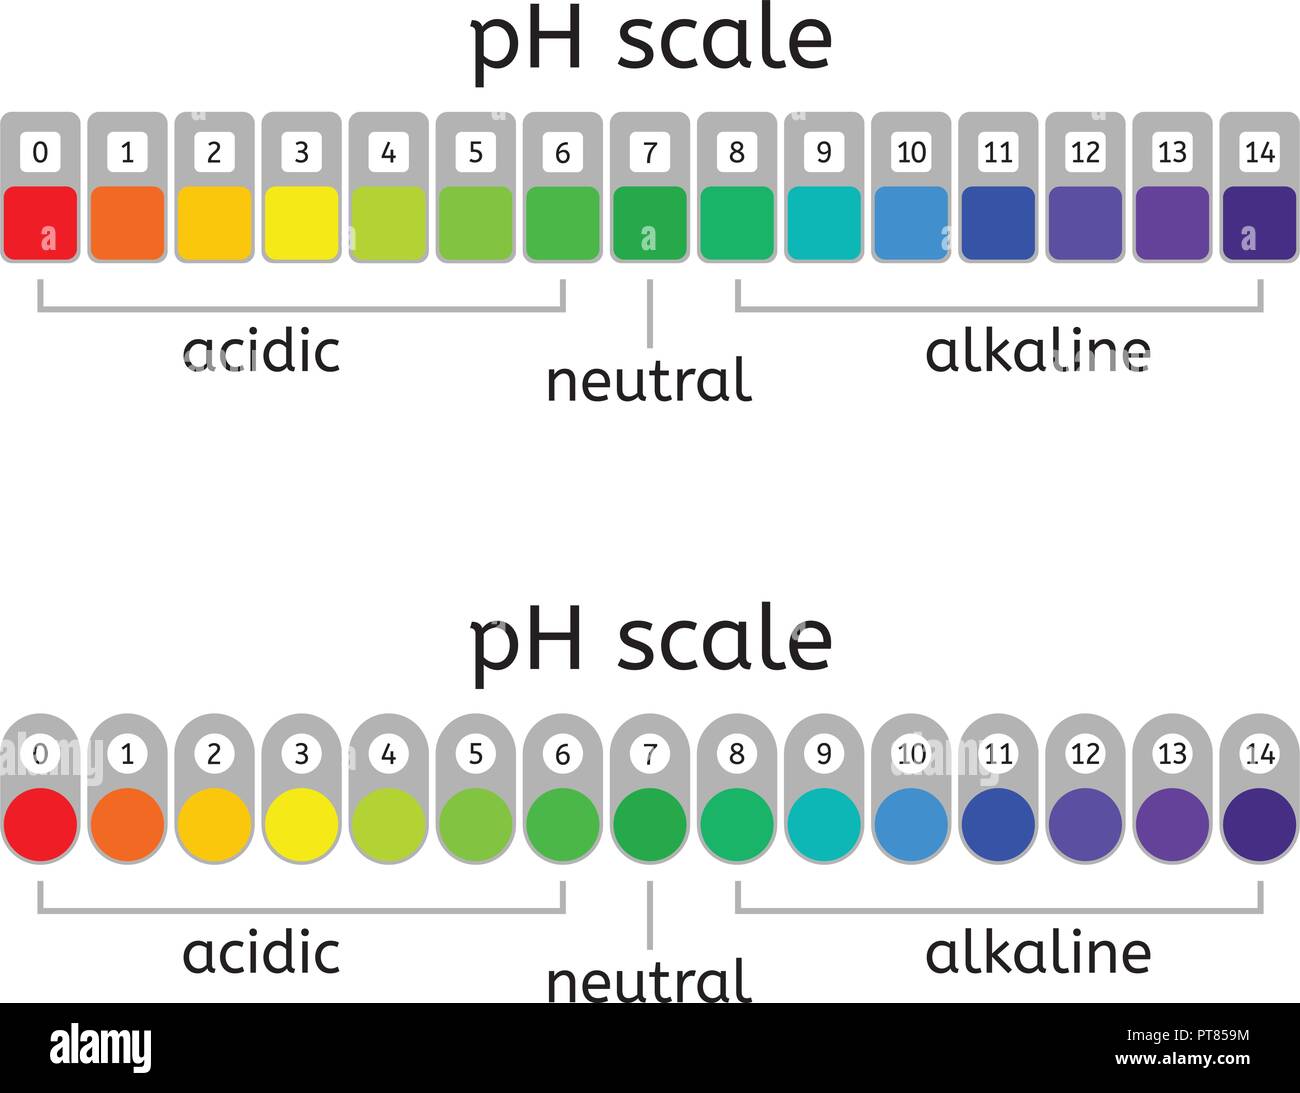 scala wert valore alcalino skala folle acide acidi alcaline misurazione alkaline acidic misura messung sauren neutralen alkalischen diagramm alkalische acid